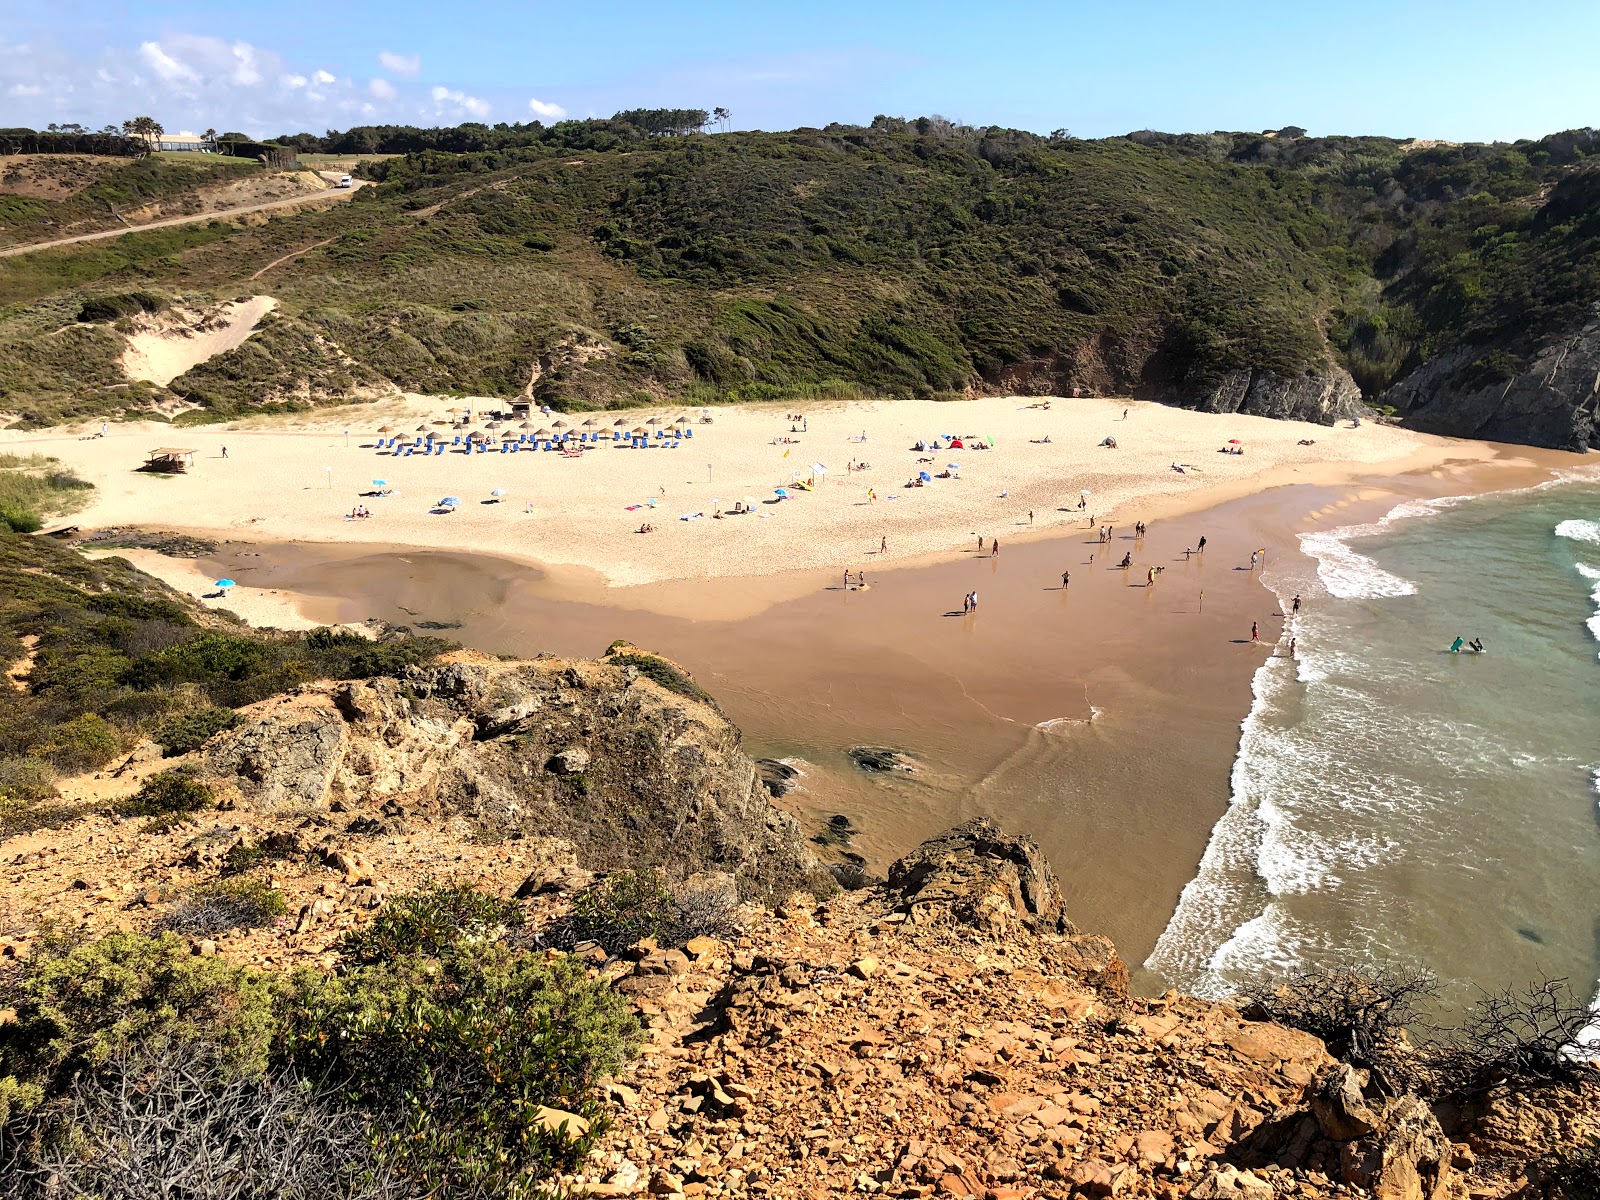 Foto de Praia do Carvalhal con brillante arena fina superficie